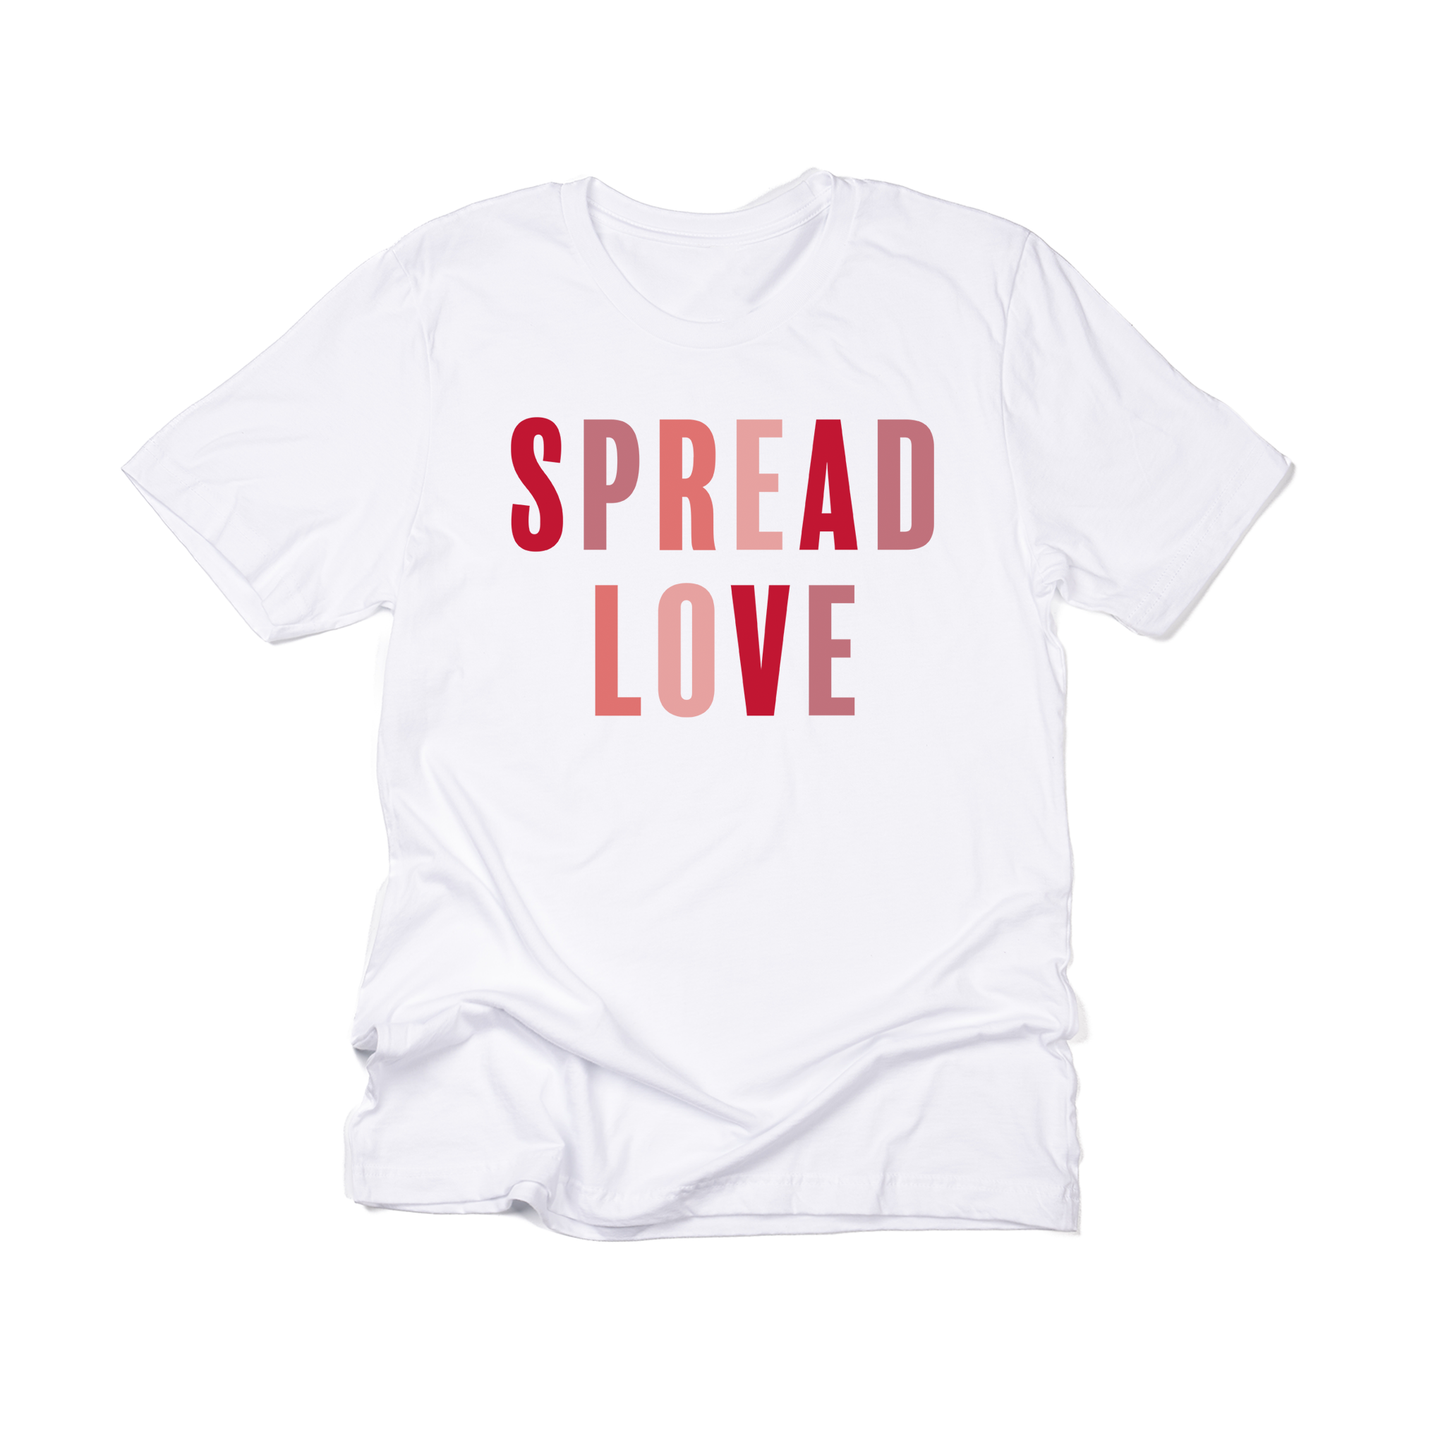 Spread Love - Tee (White)